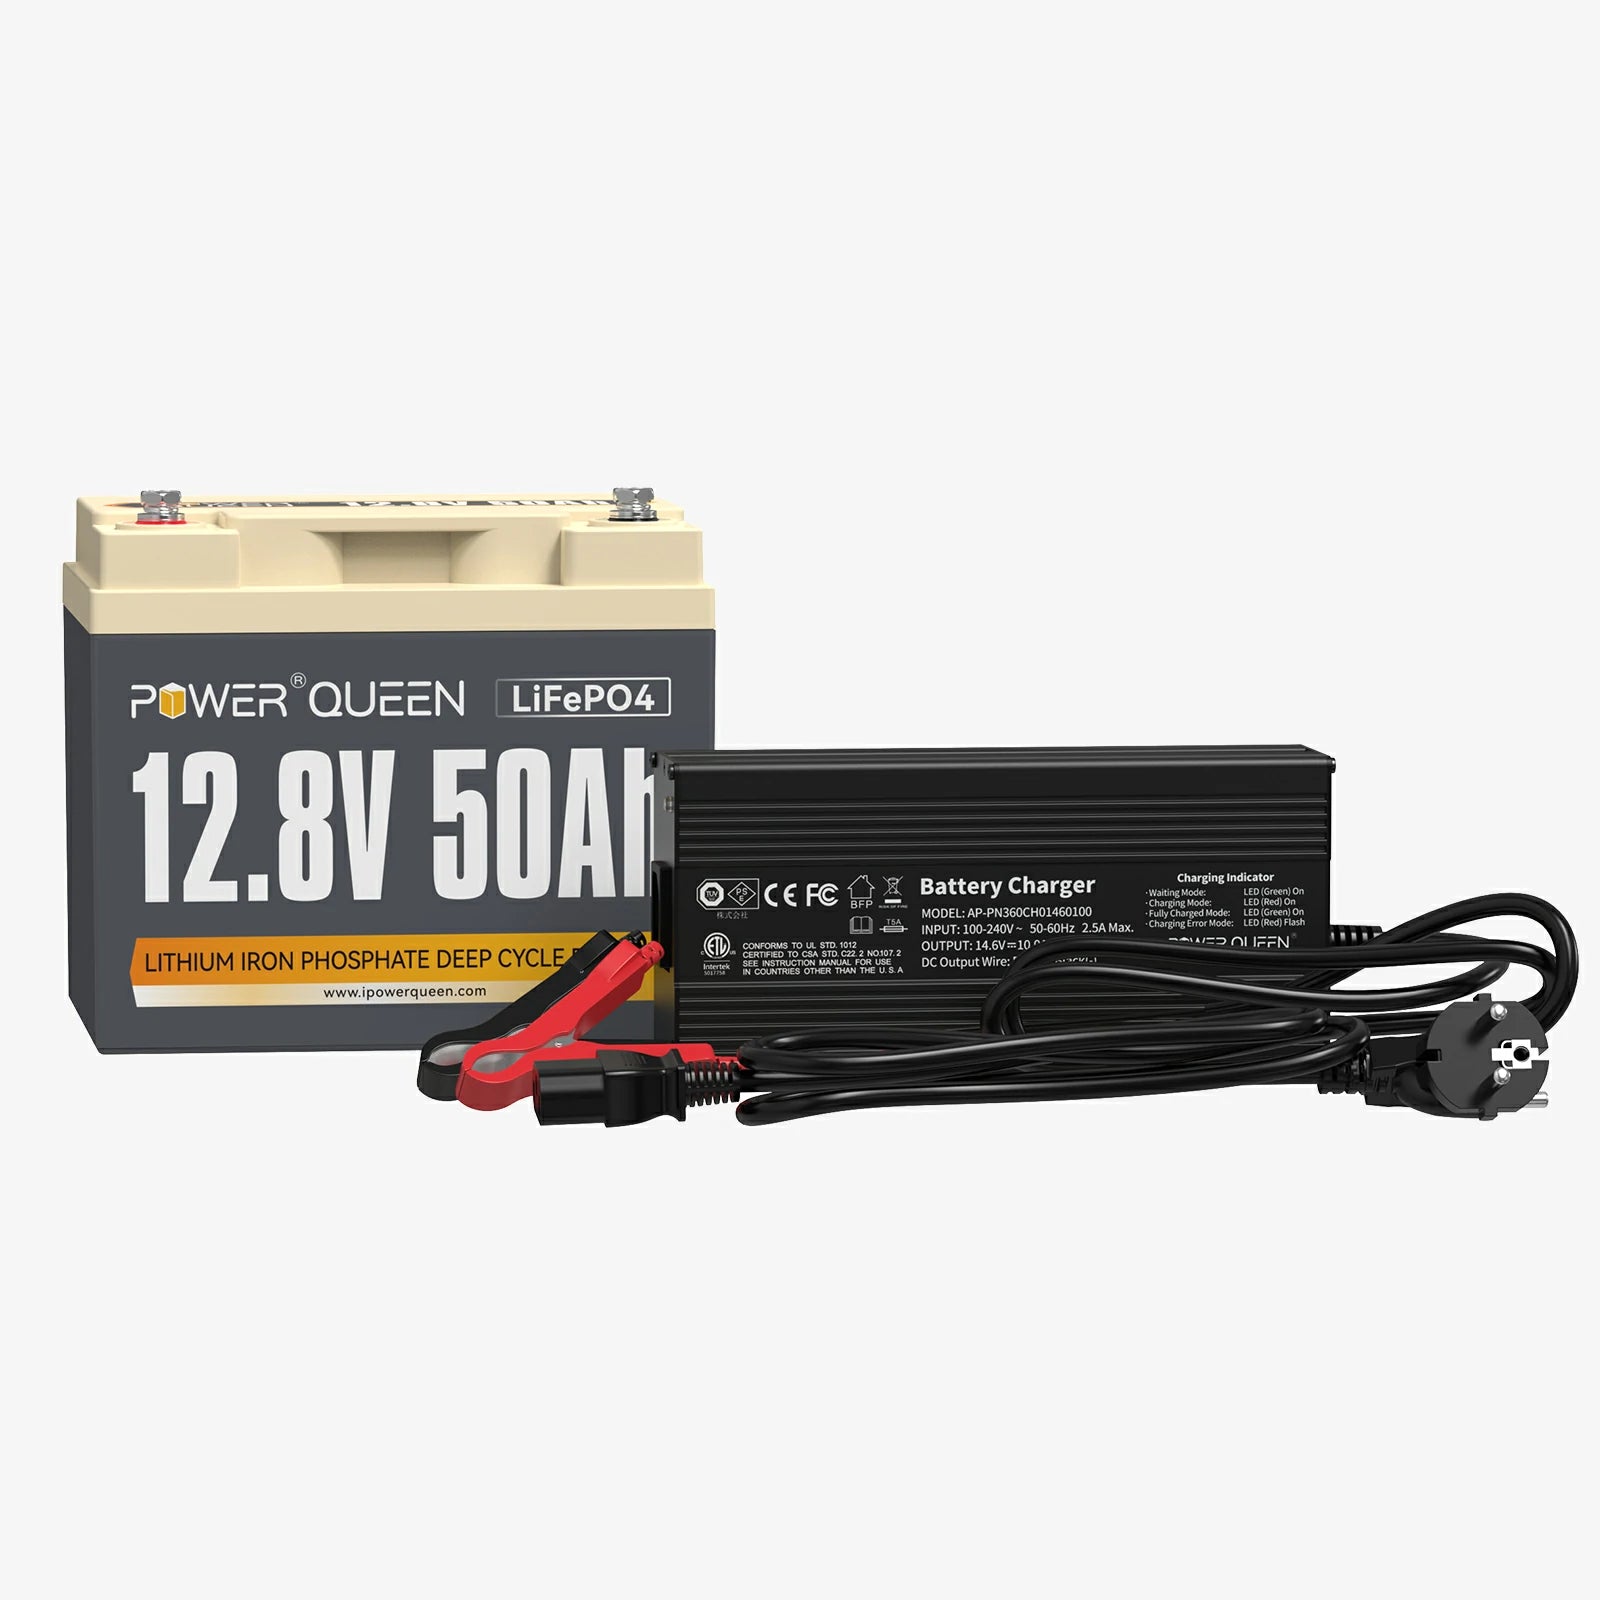 50Ah Lithium LiFePO4 Batterie PB-LI-50 (DIN) 50A - 12,8V / 50 Ah